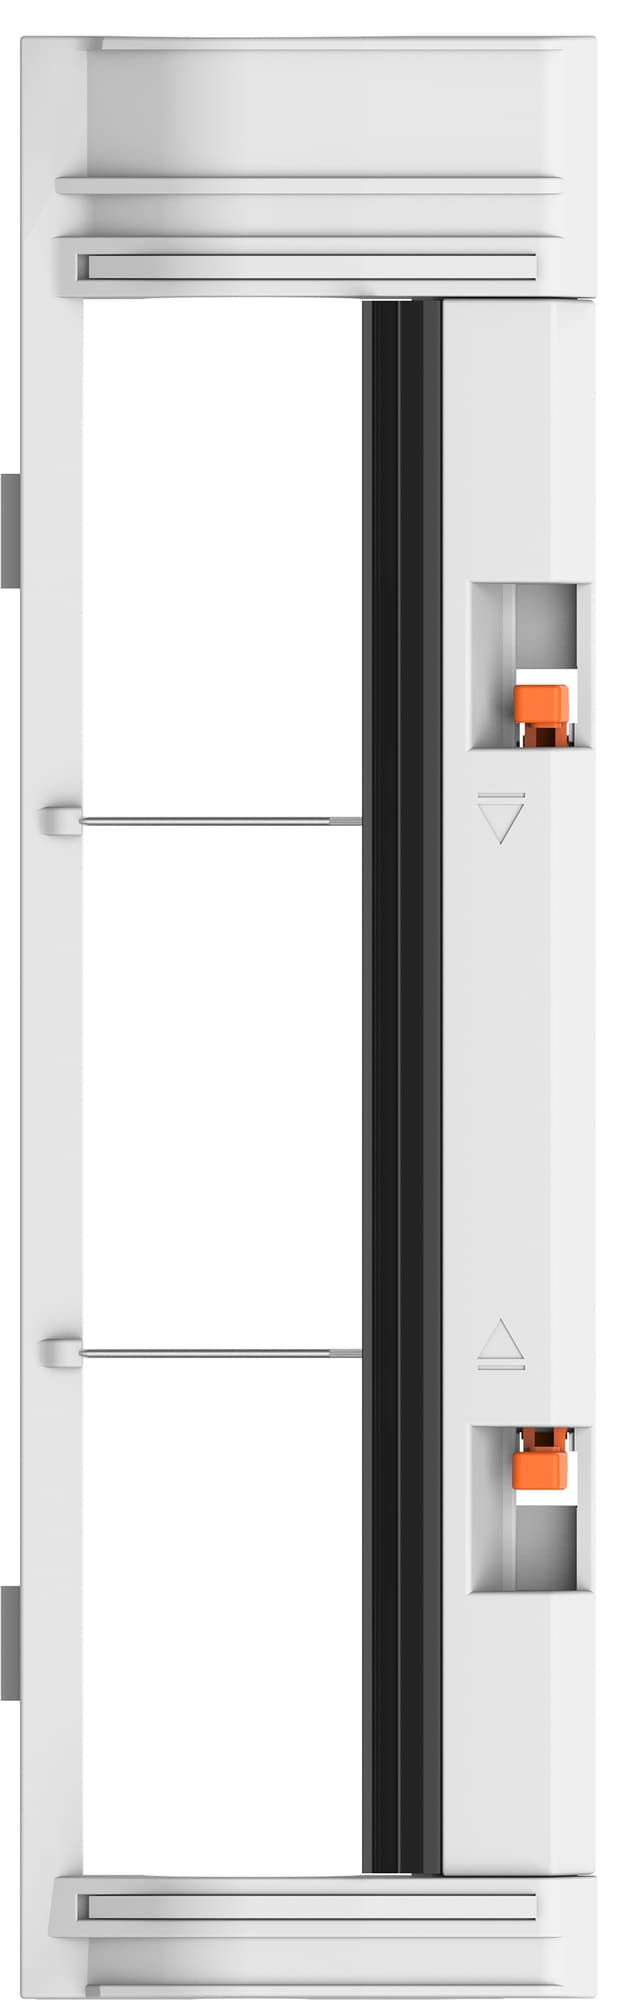 Se Xiaomi Mi Robot Vacuum Mop Essential børstedækken-erstatning hos Elgiganten